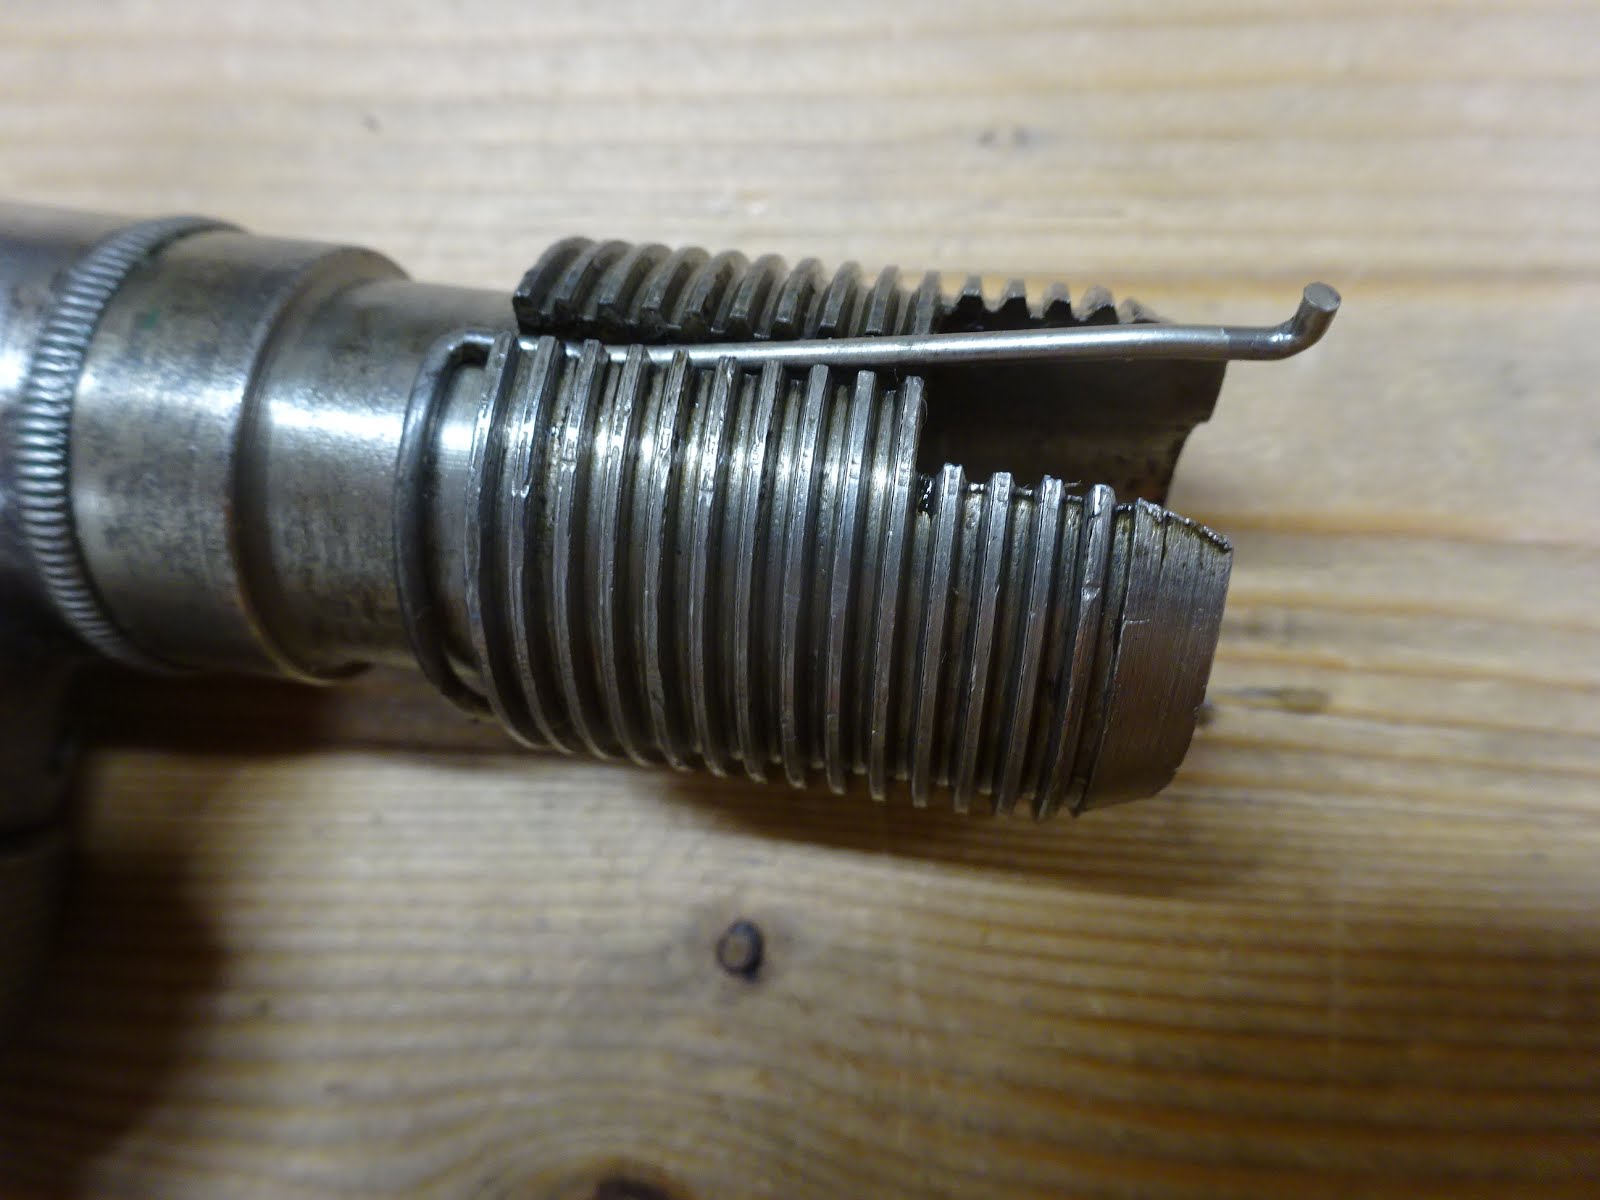 Hand Drill Brace and Bit - 10 inch, 3 jaw chuck